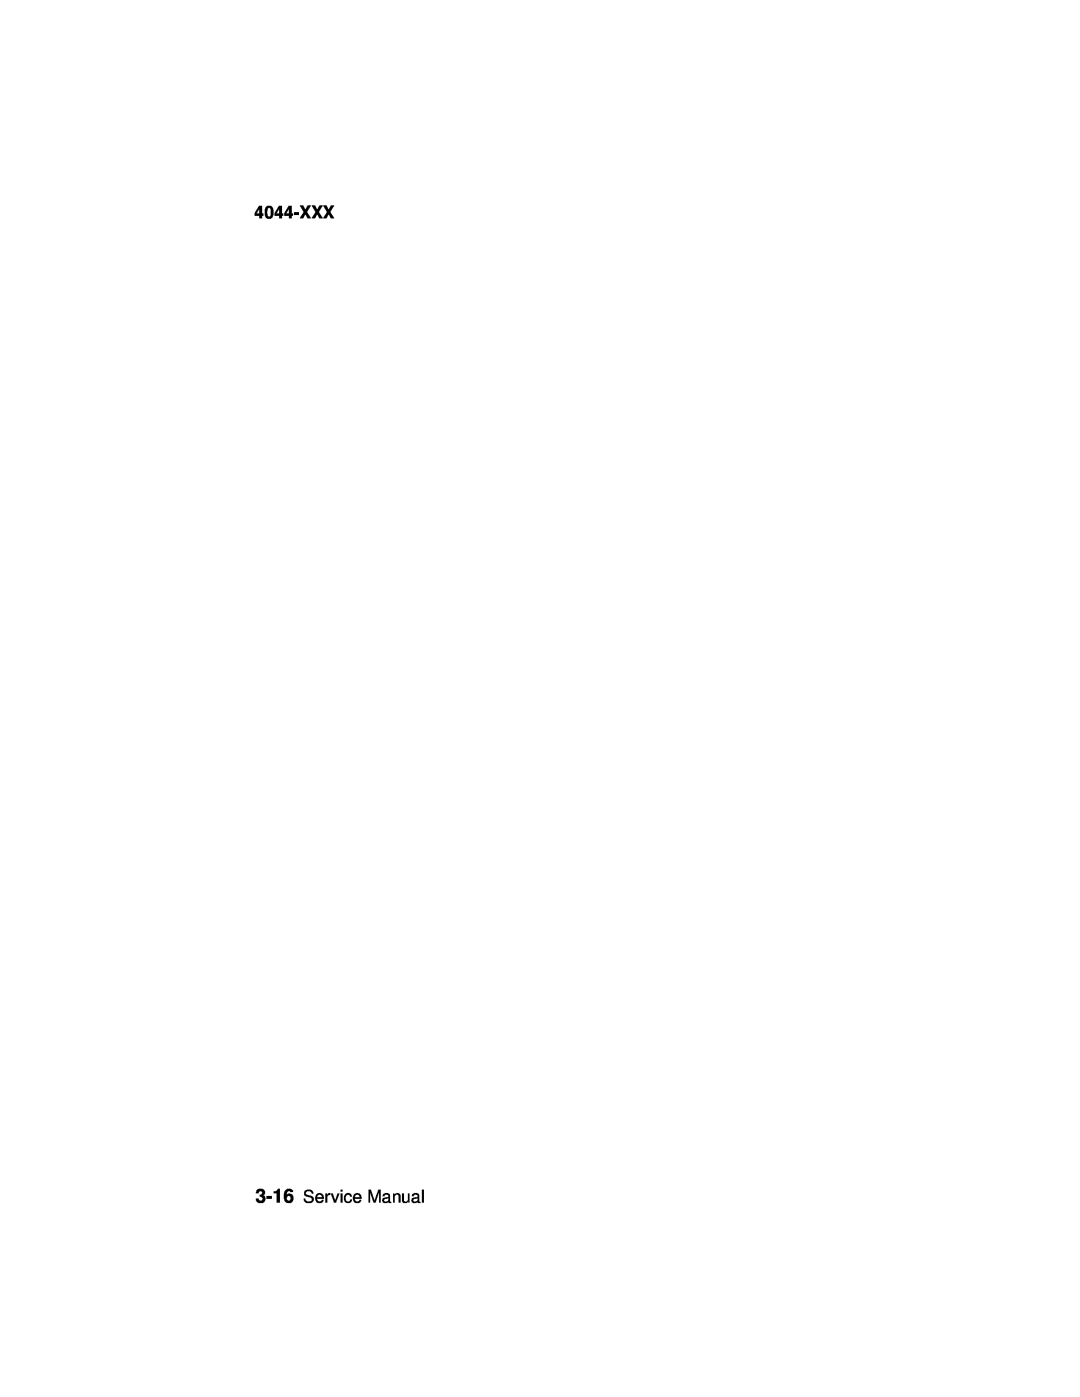 Lexmark 4044-XXX, E310 manual 